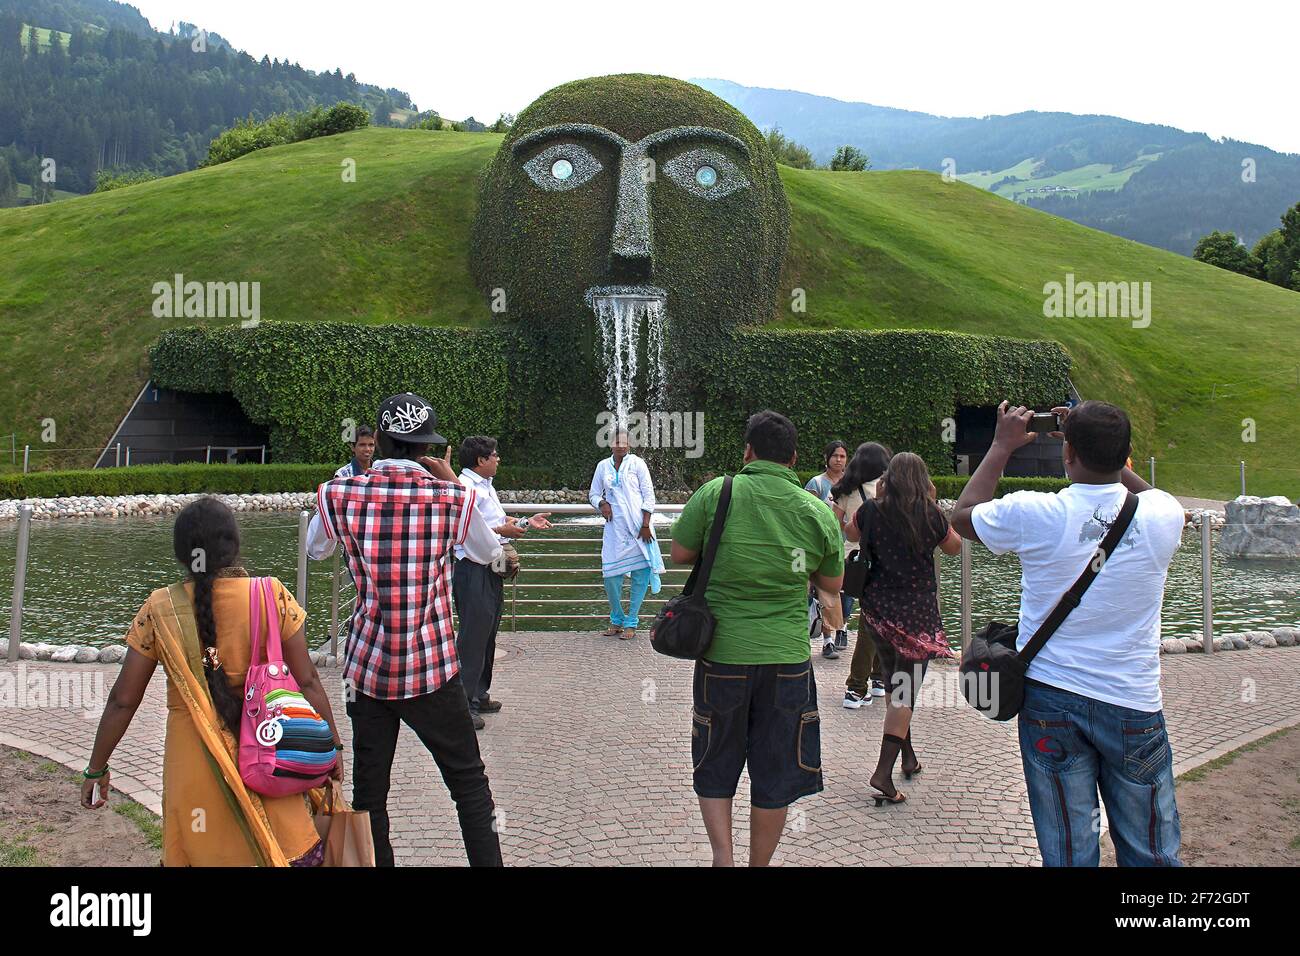 The Giant at entrance to Swarovski Crystal Worlds, Wattens, Austria, Europe  Stock Photo - Alamy